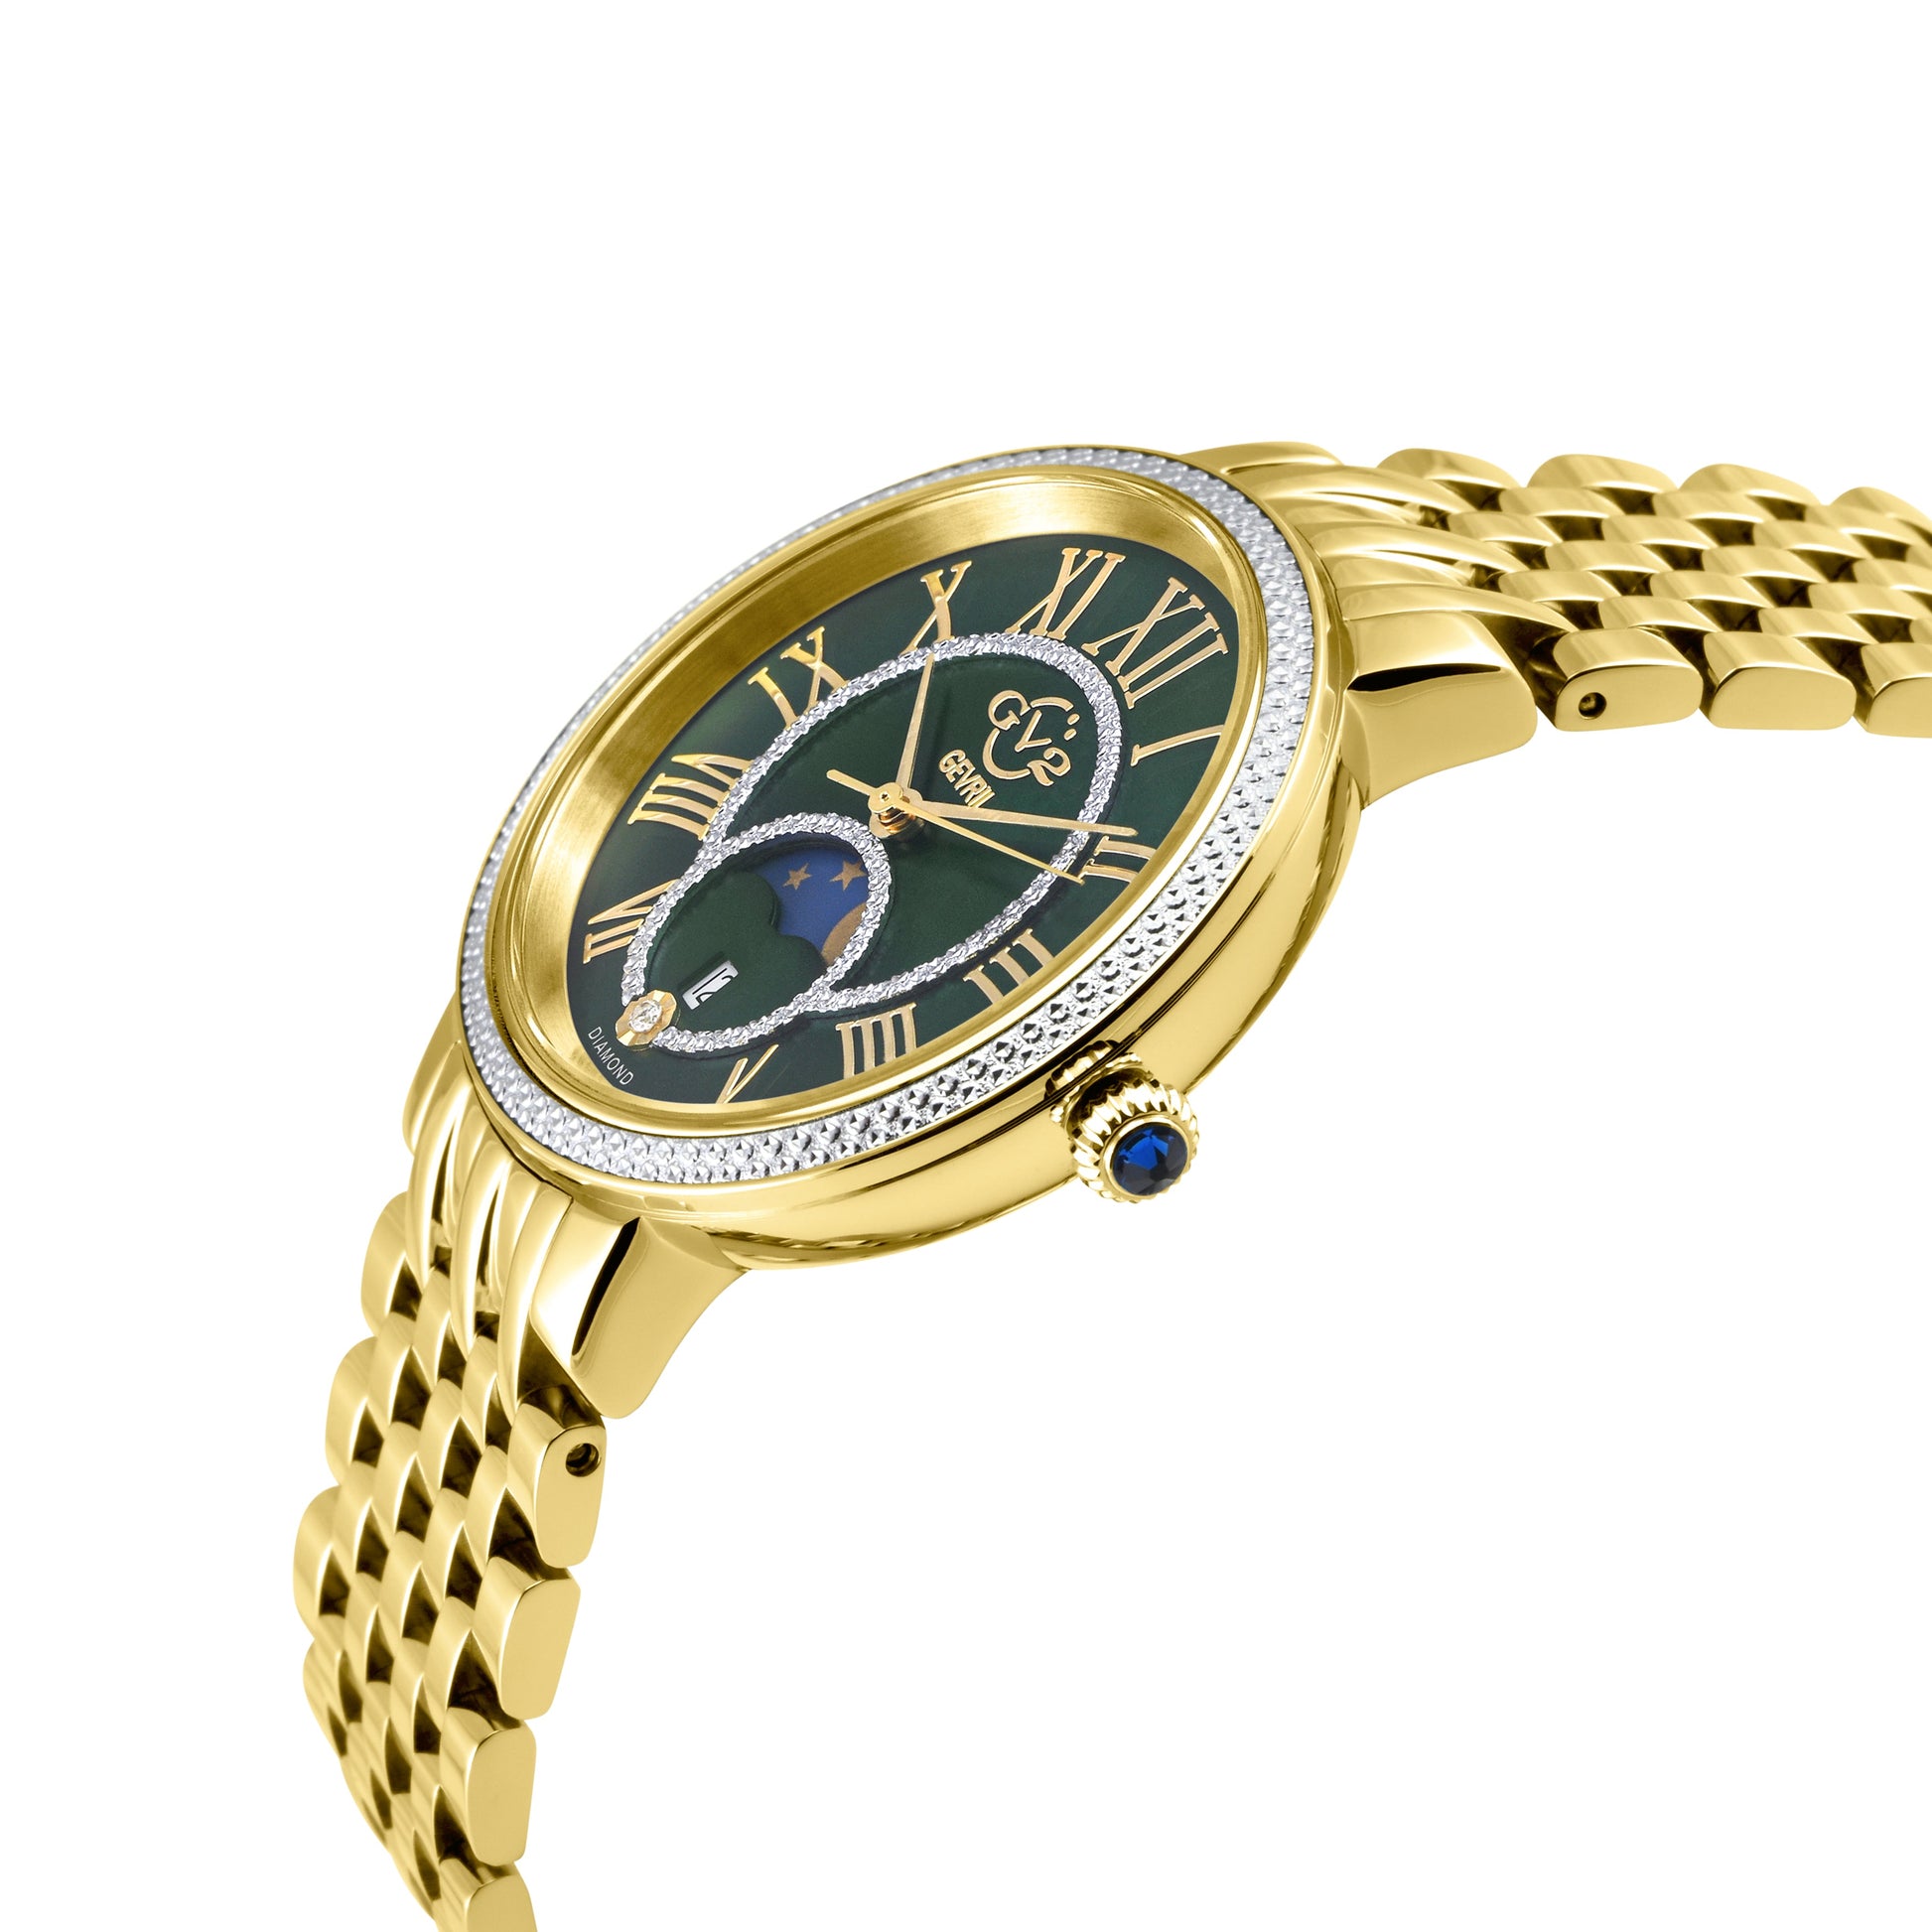 Gevril-Luxury-Swiss-Watches-GV2 Genoa Diamond - Moon Phase-12544B